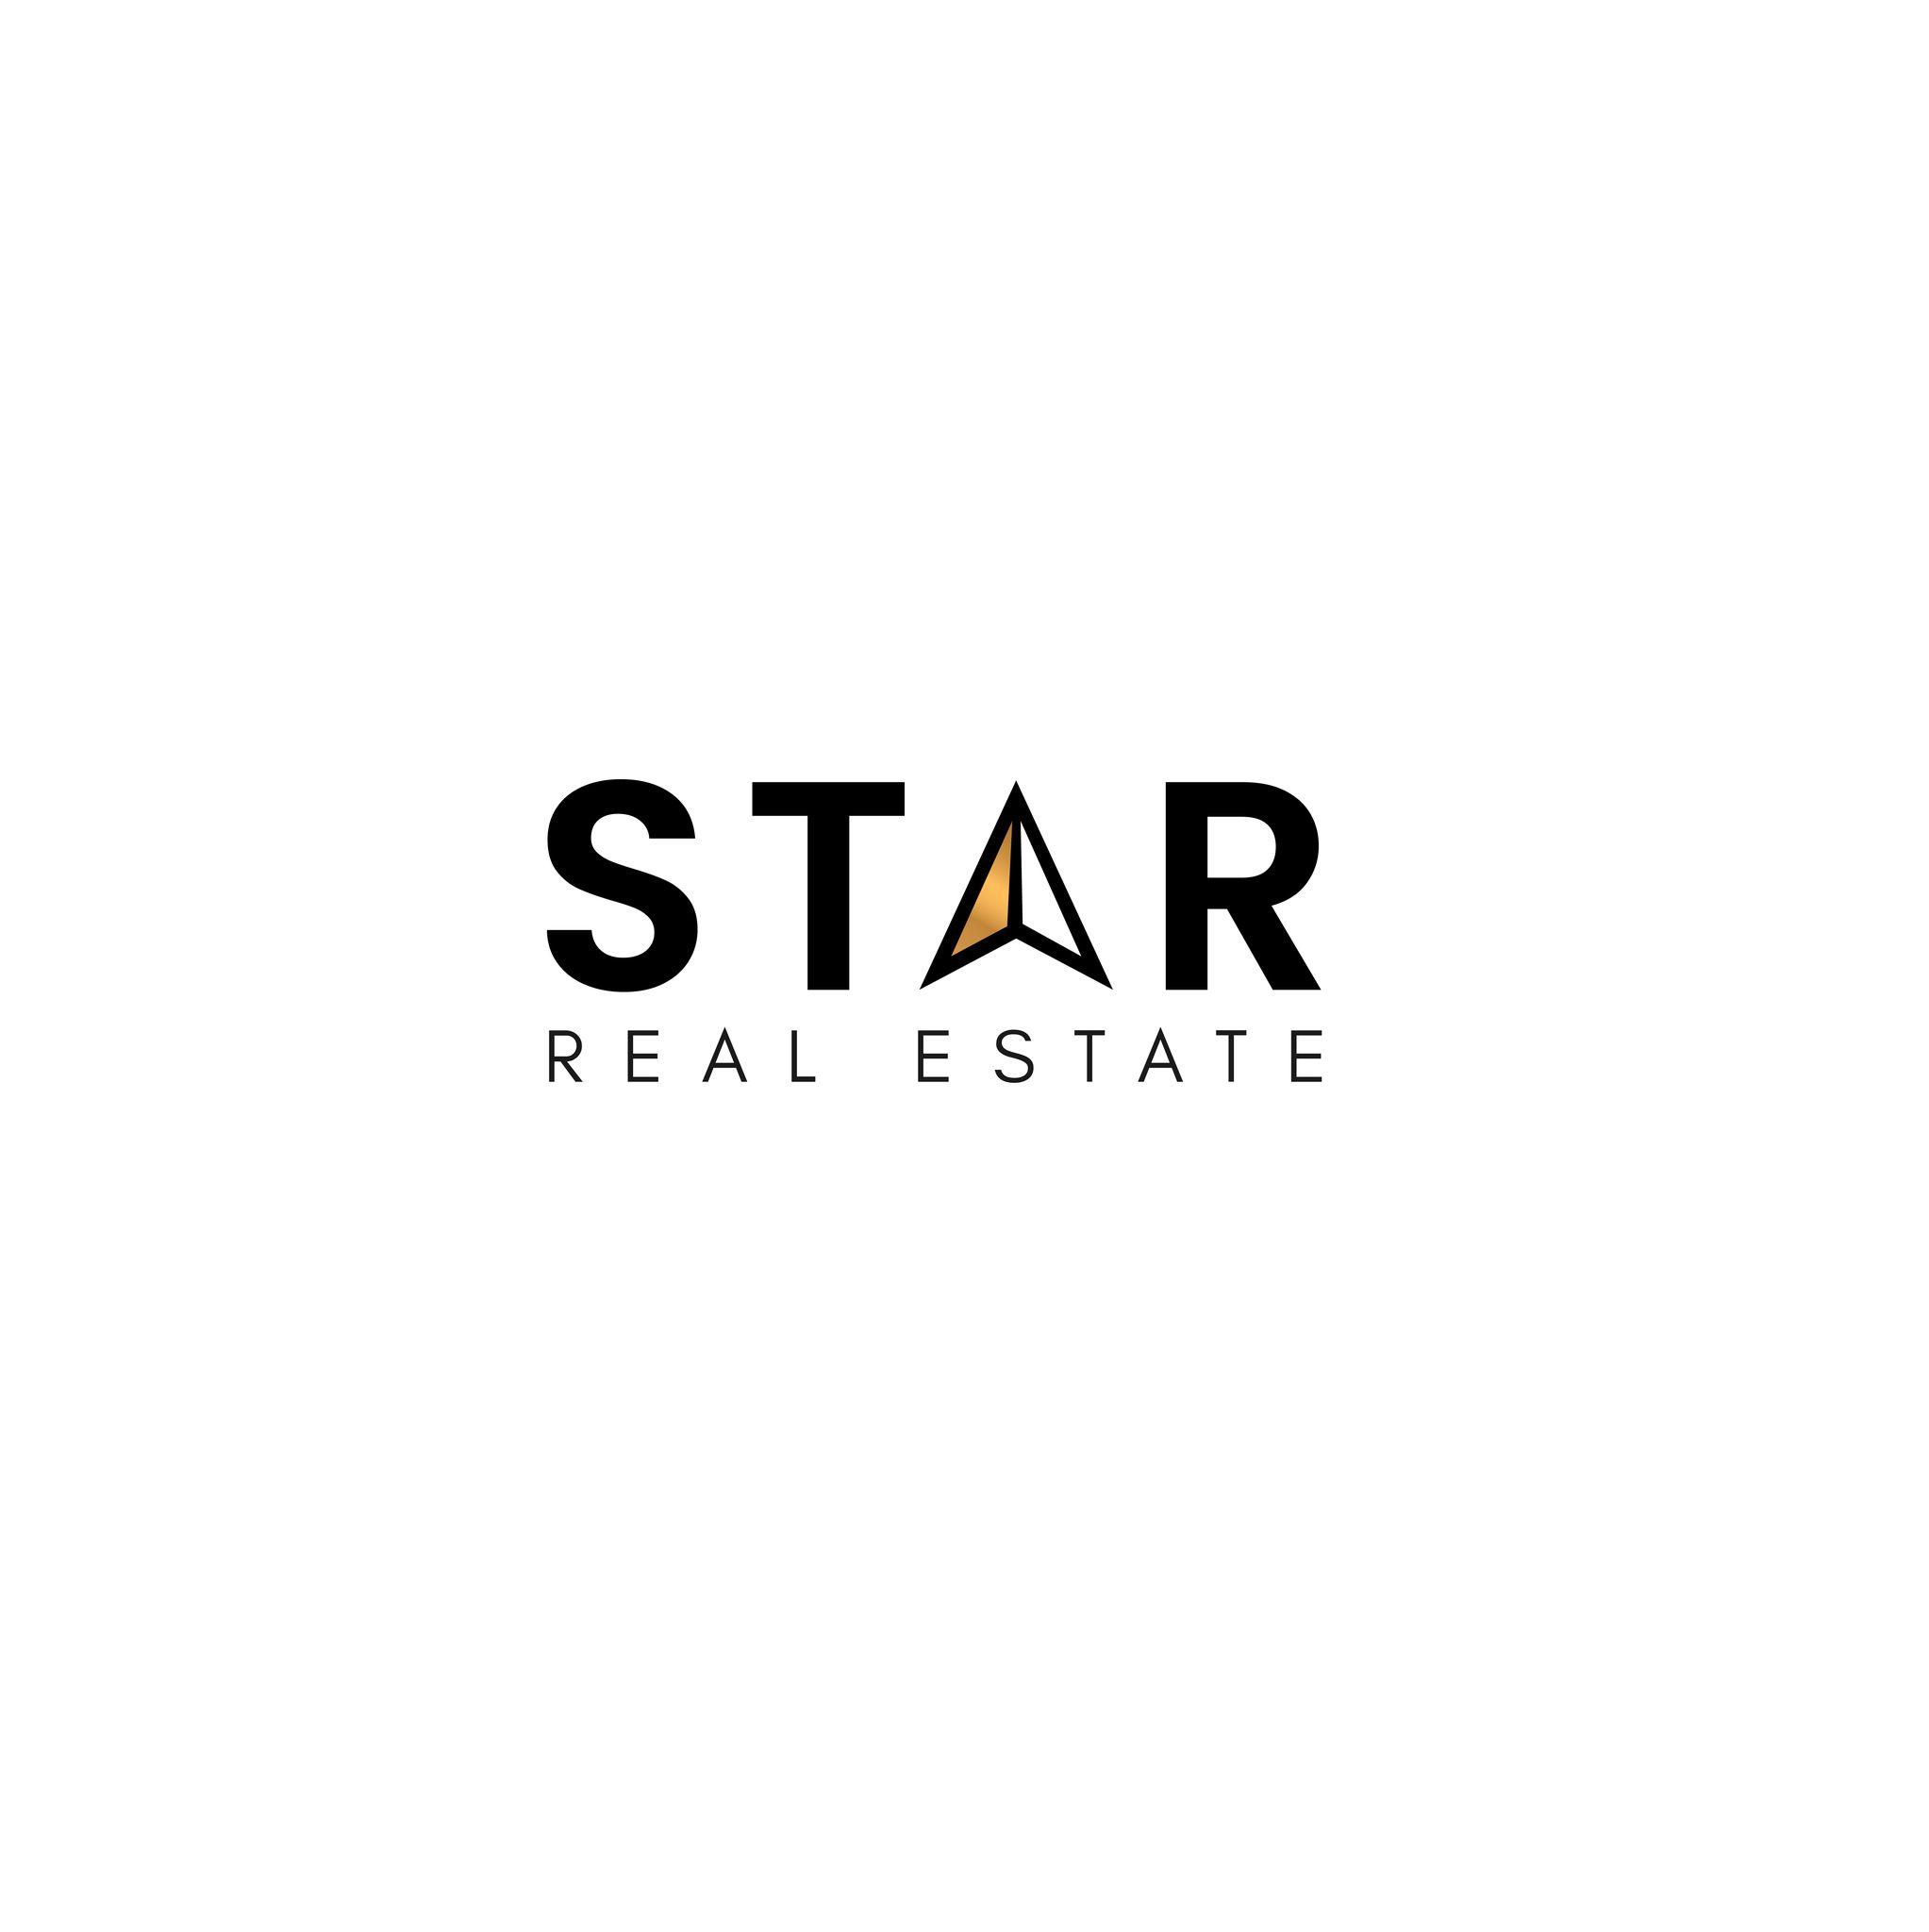 Star Real Estate